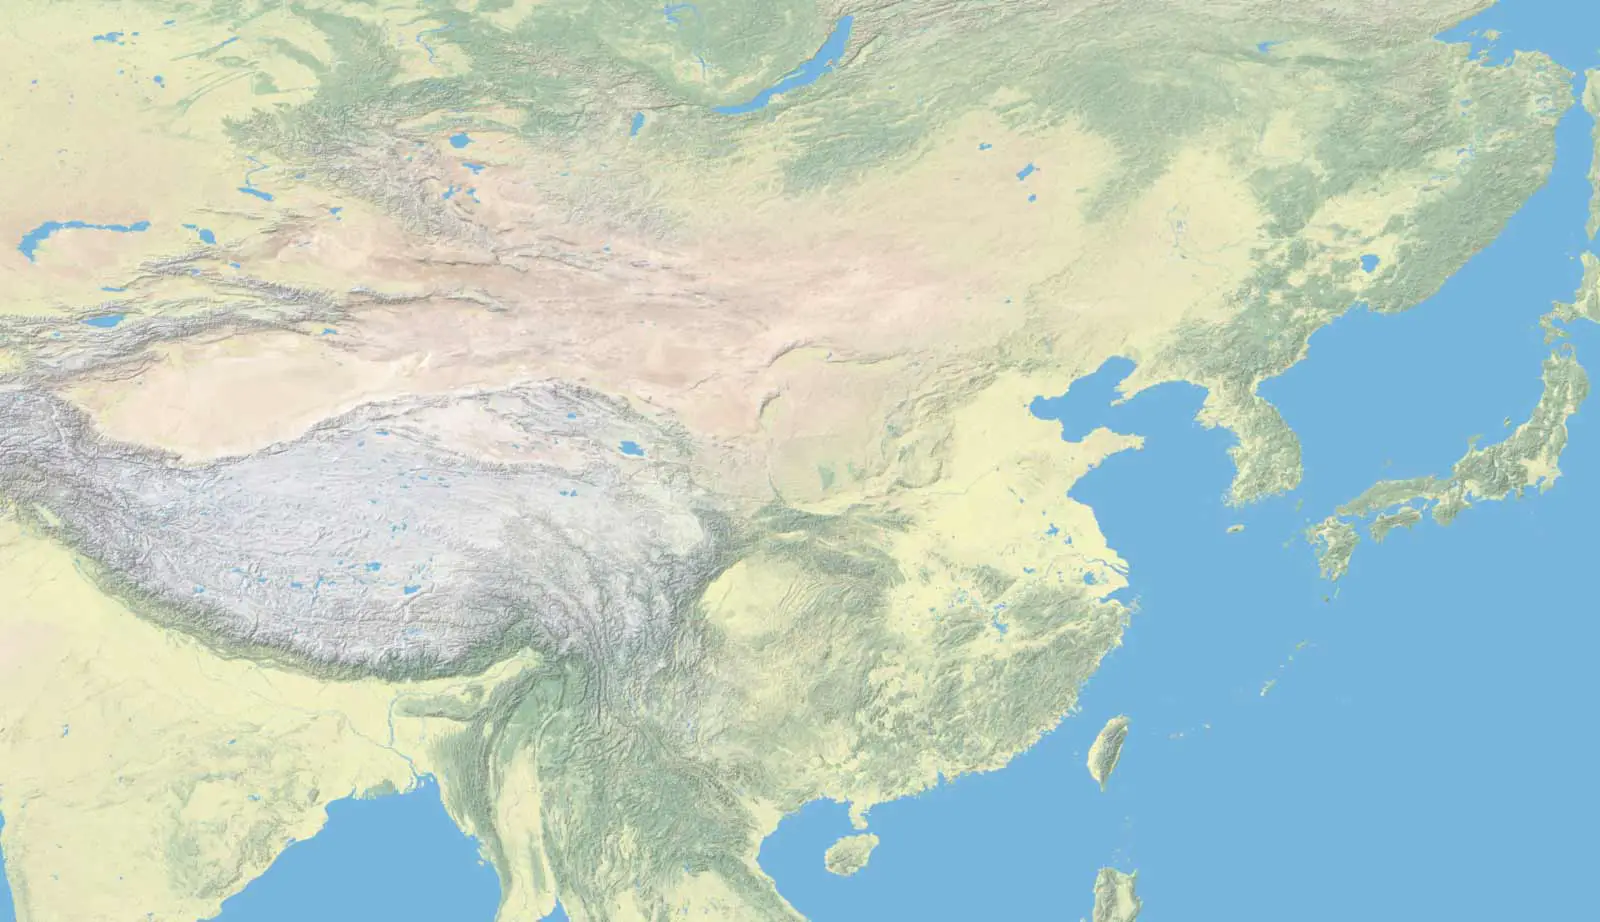 China Topography